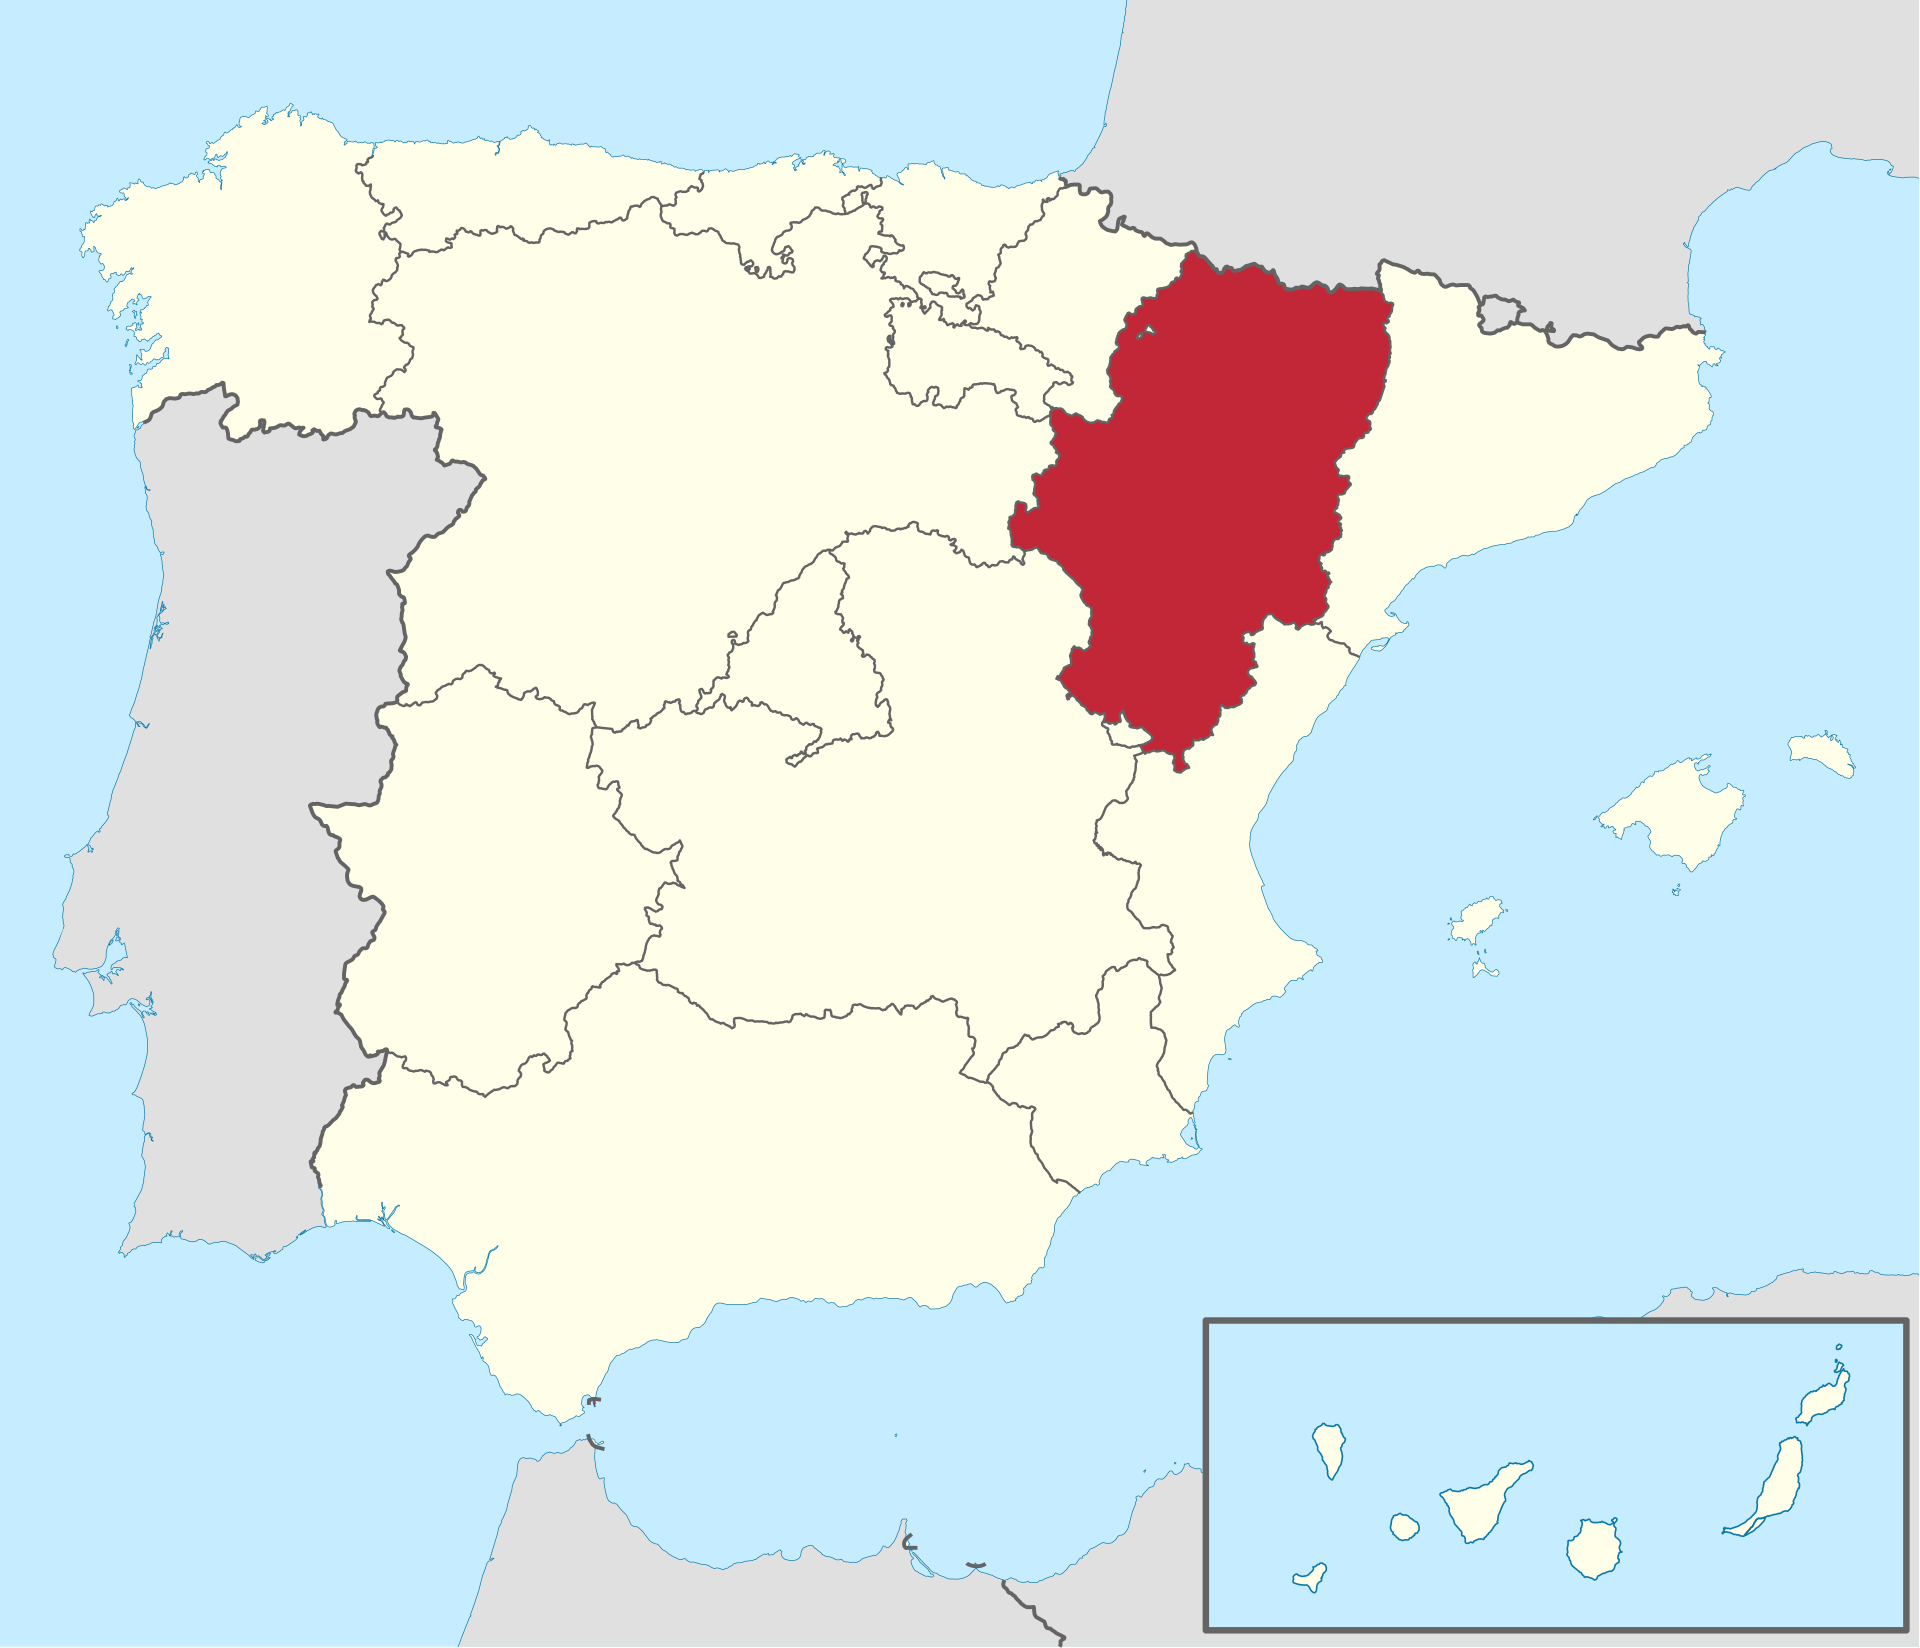 Chineese Wall Urbex location or around the region Aragón (Huesca), Spain